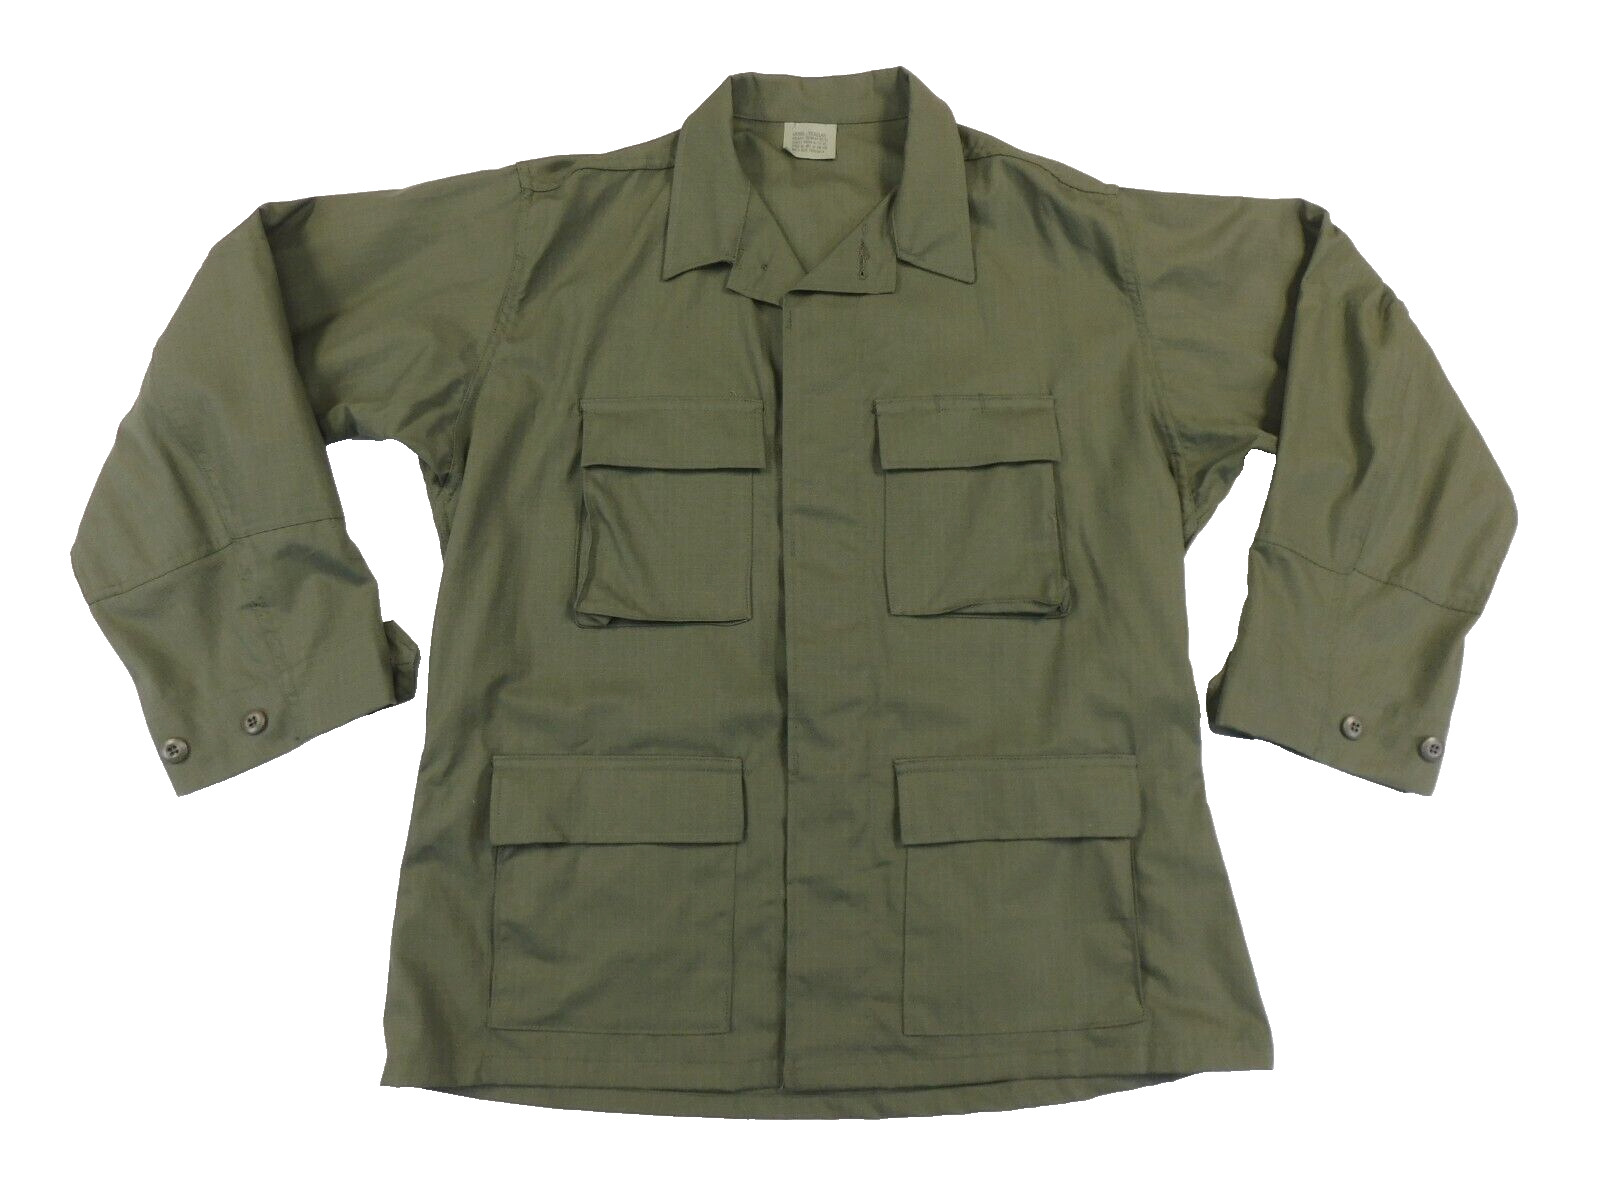 Propper US Military Combat Coat Large Regular Green Cotton Ripstop Uniform Shirt